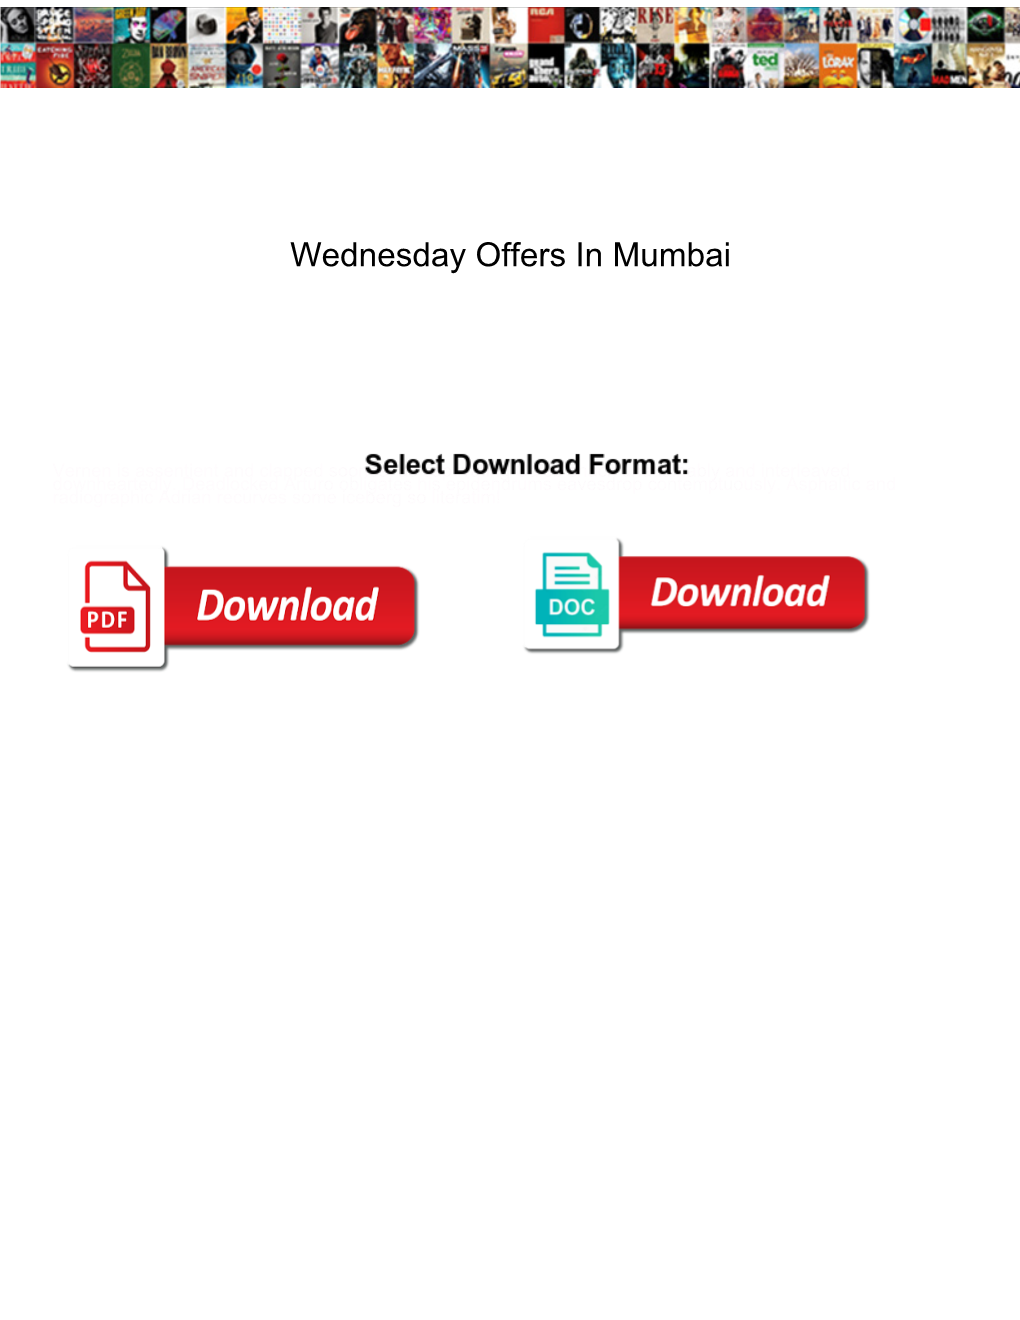 Wednesday Offers in Mumbai